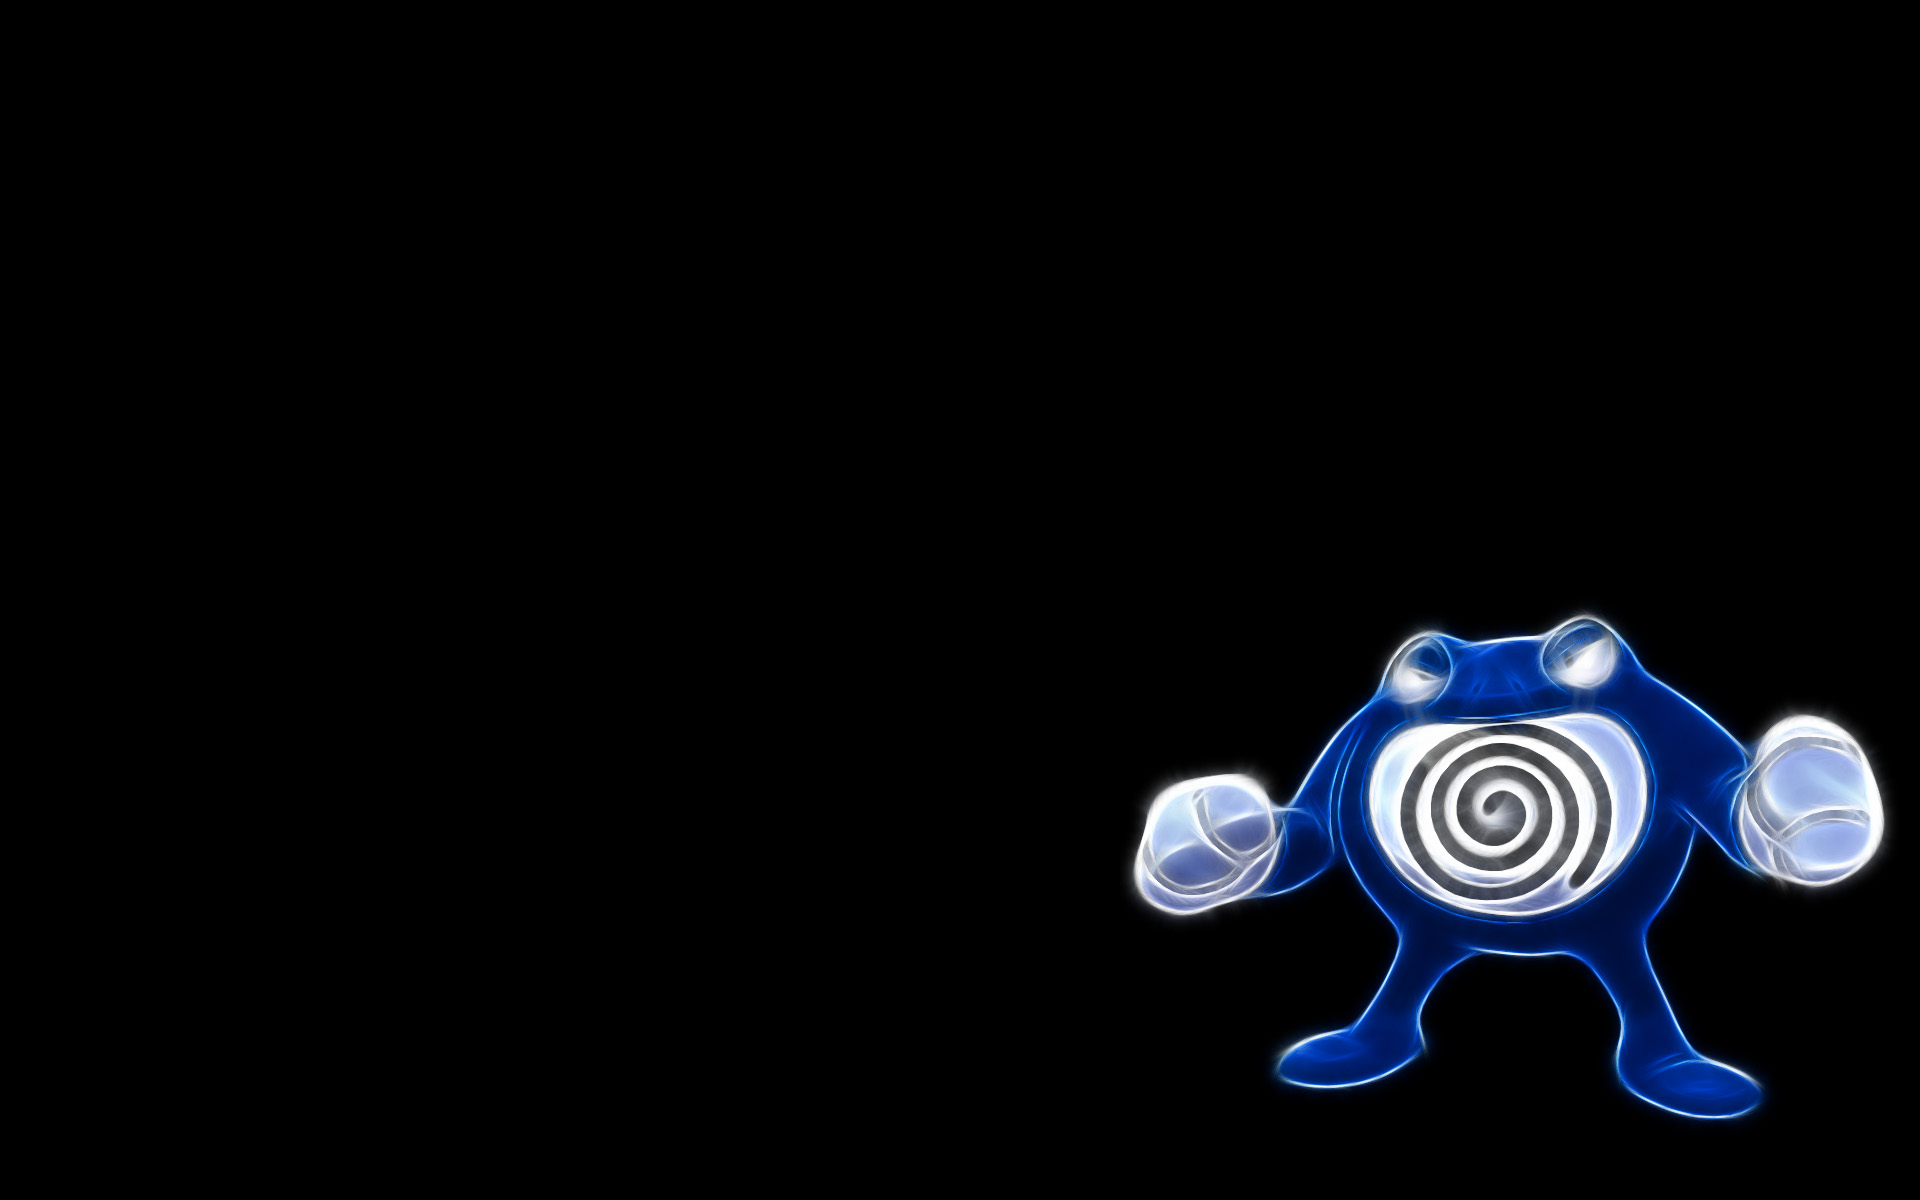 Anime desktop wallpaper featuring Poliwrath, a powerful water Pokémon from Pokémon franchise.